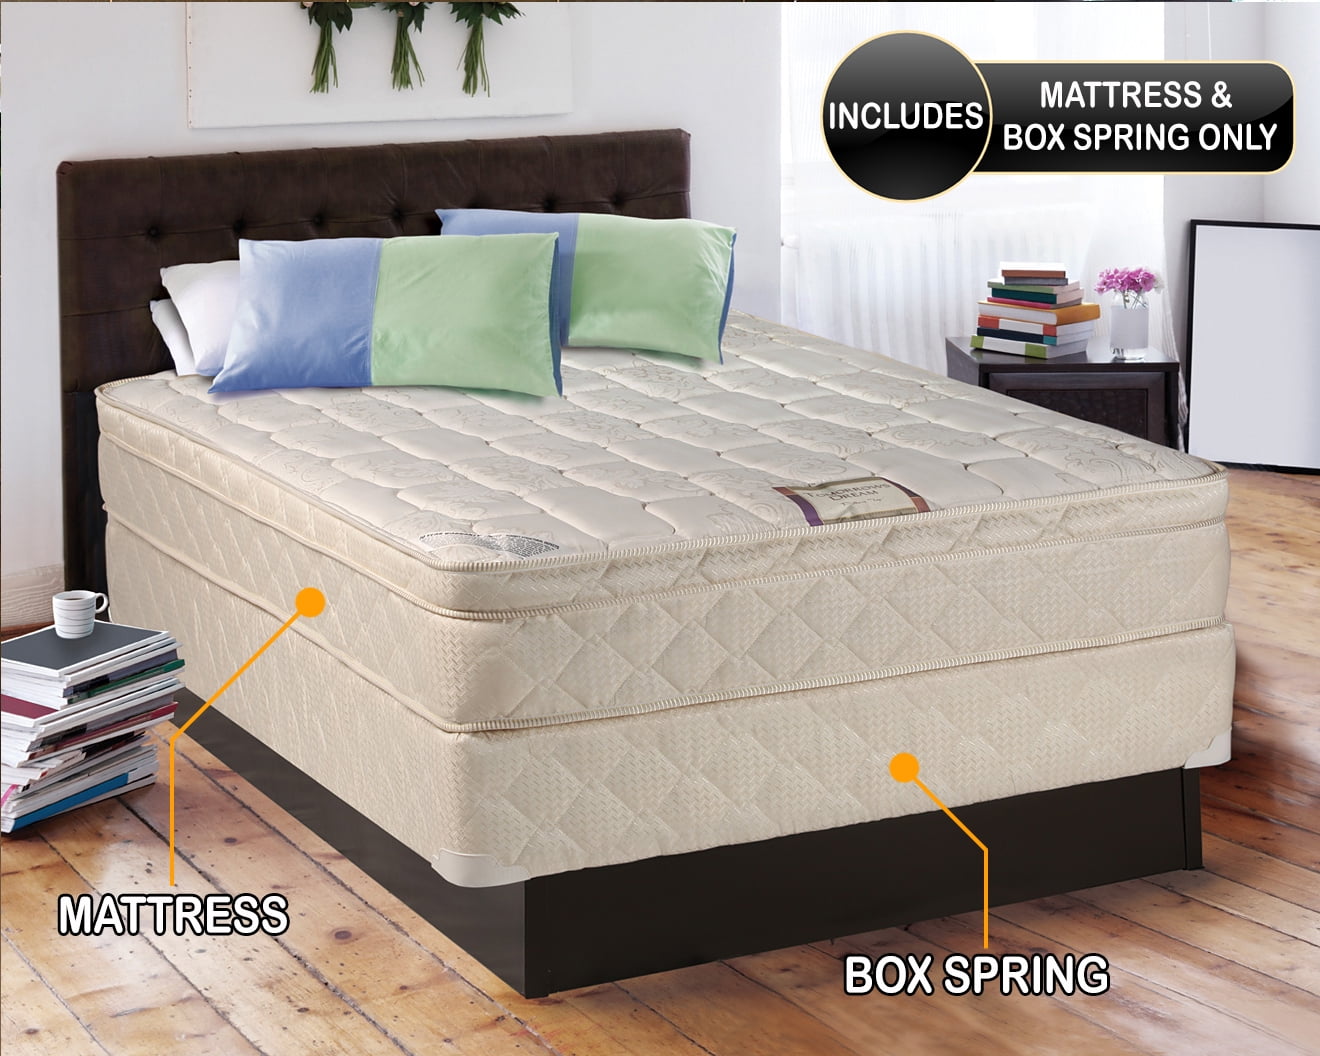 firm queen mattress and box spring